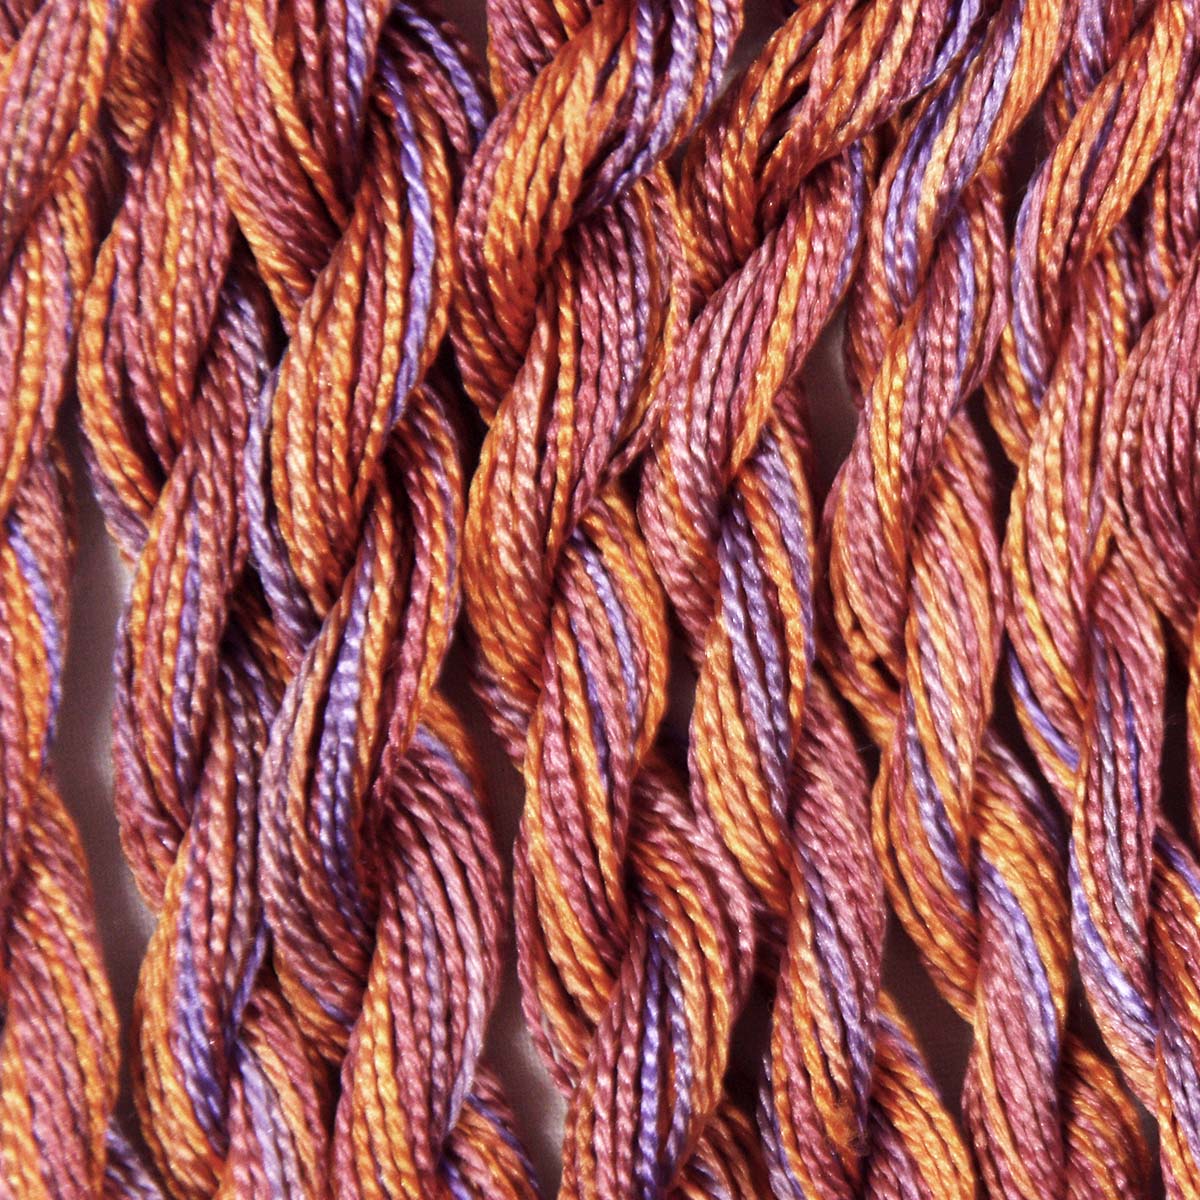 www.colourstreams.com.au Colour Streams Hand Dyed Silk Threads Silken Strands Ophir Exotic Lights Aurora Slow Stitch Embroidery Textile Arts Fibre DL 62 Autumn Shades Oranges Purples Browns